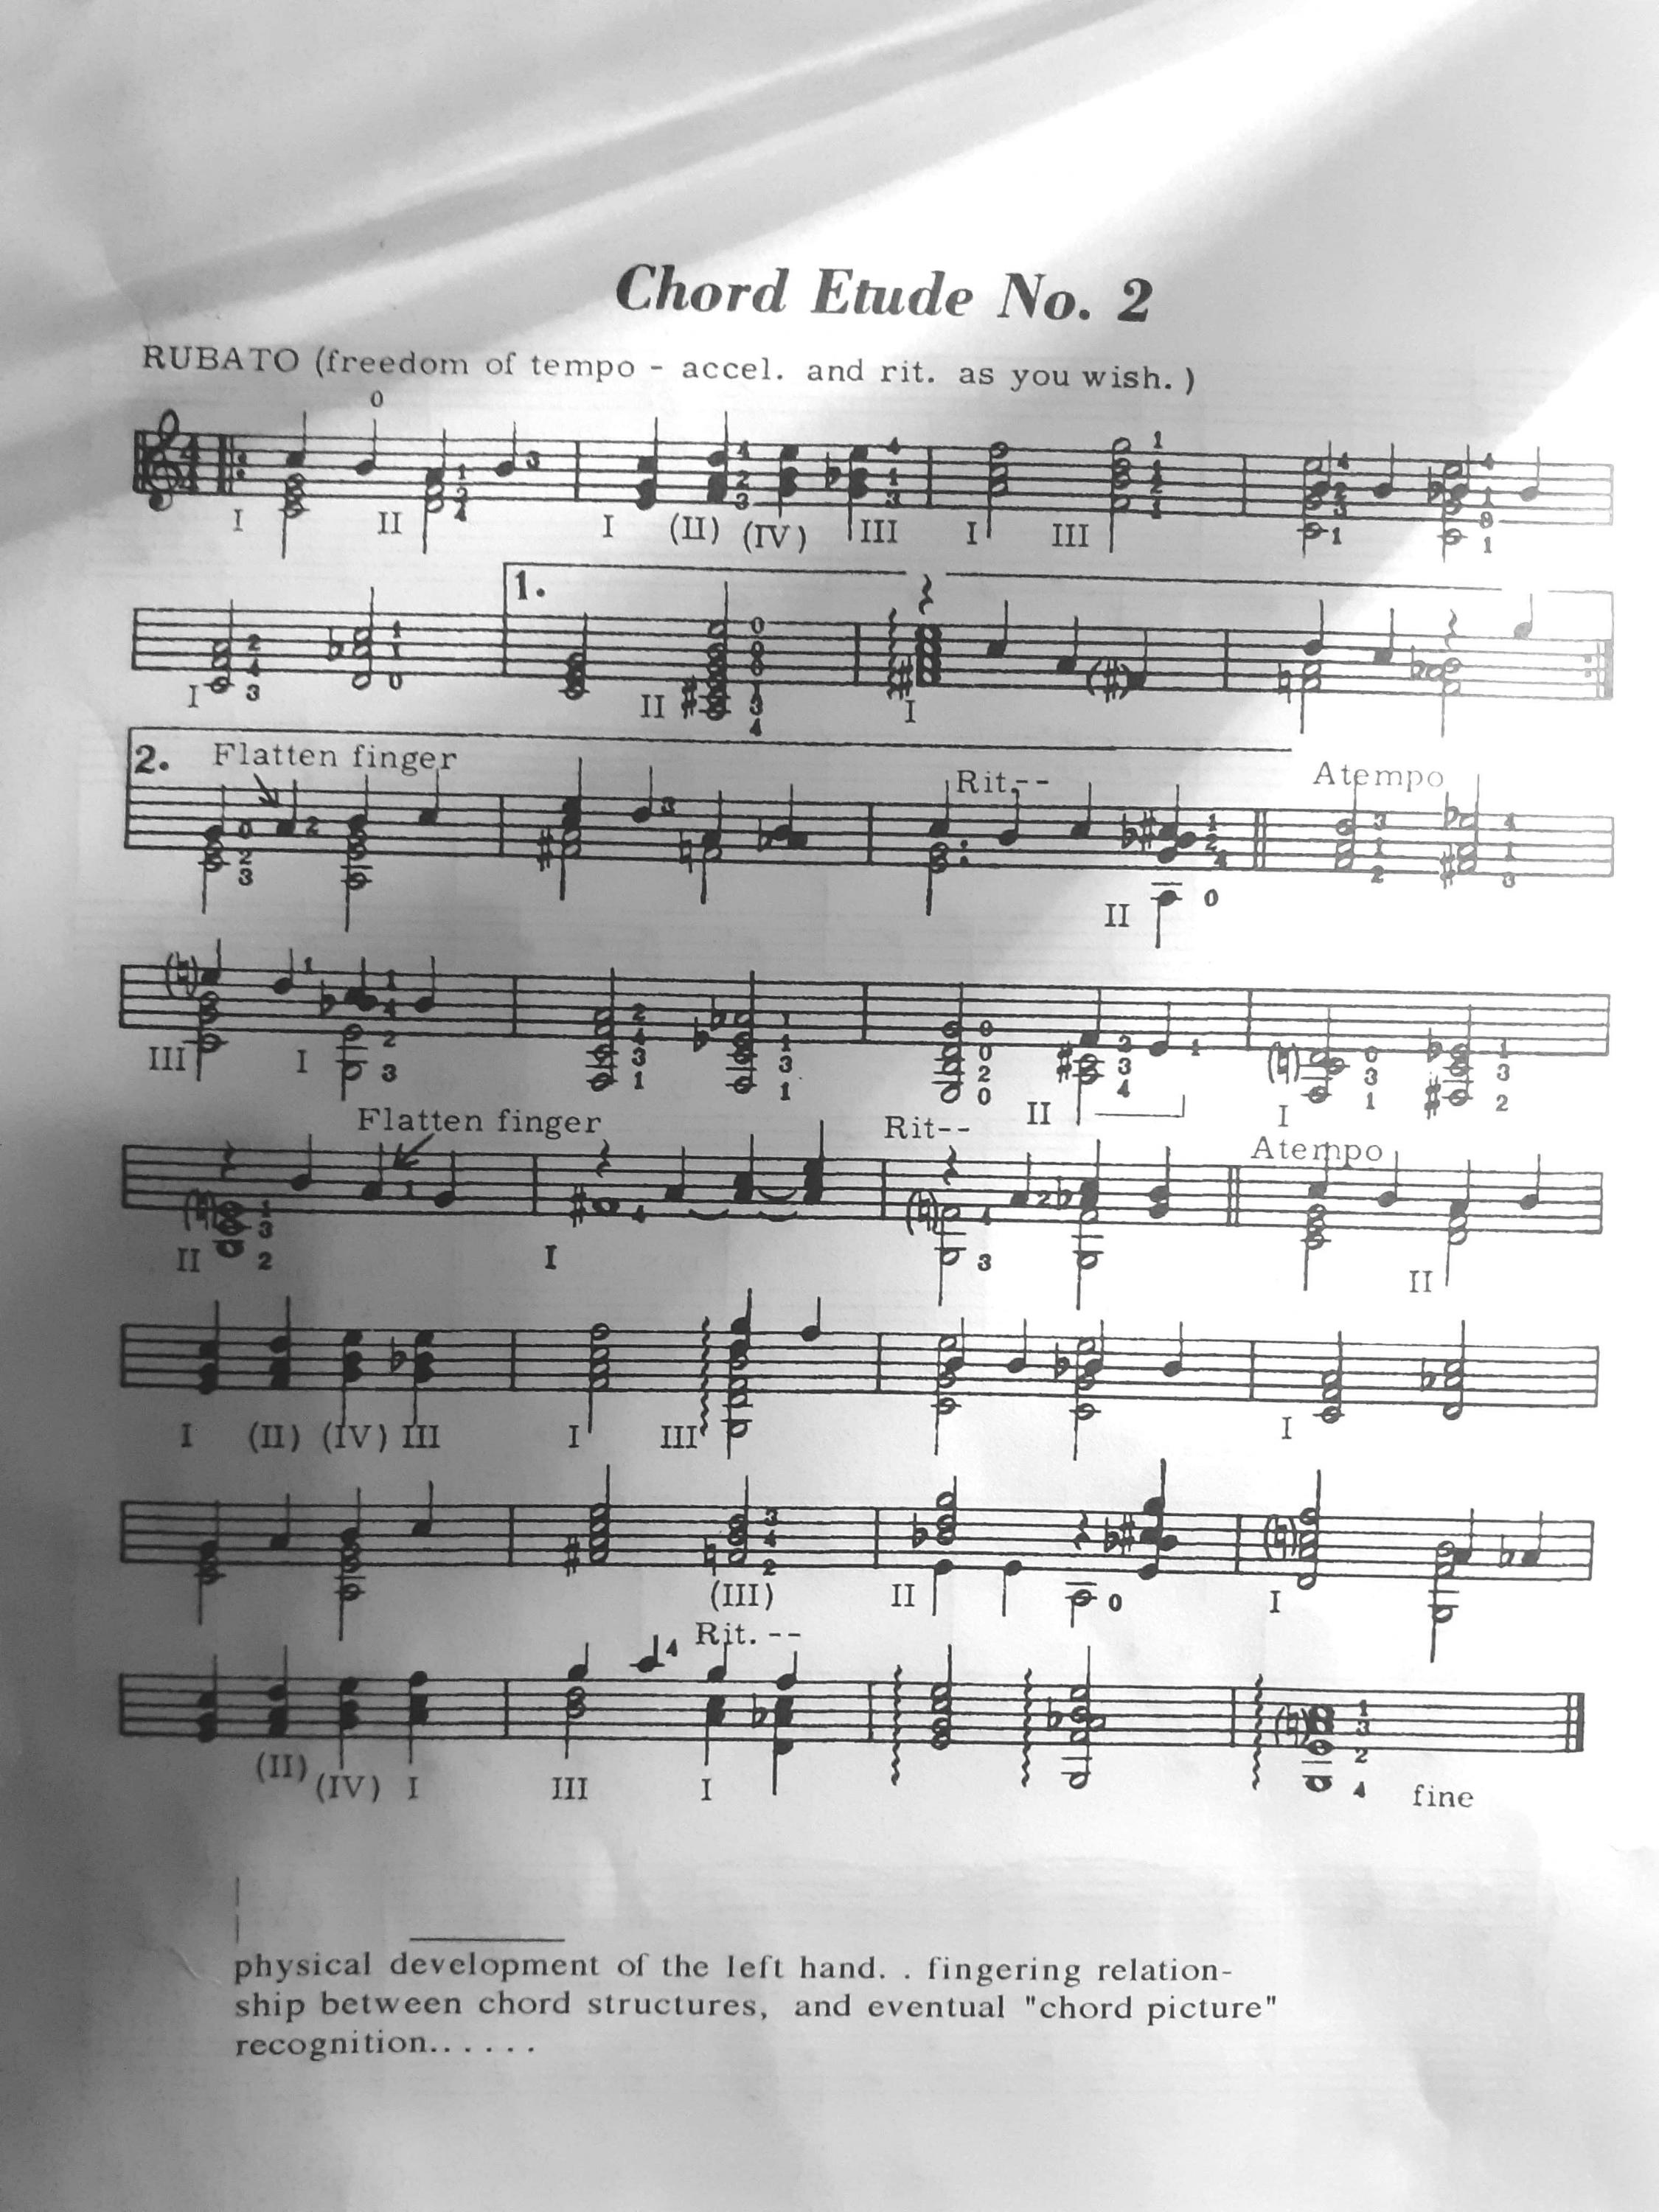 Book of chord etudes in the style of William Leavitt-yrzzpz-yv-fopiehcyhzxclqwvydjux_xczotqpcfdo-copia-jpg